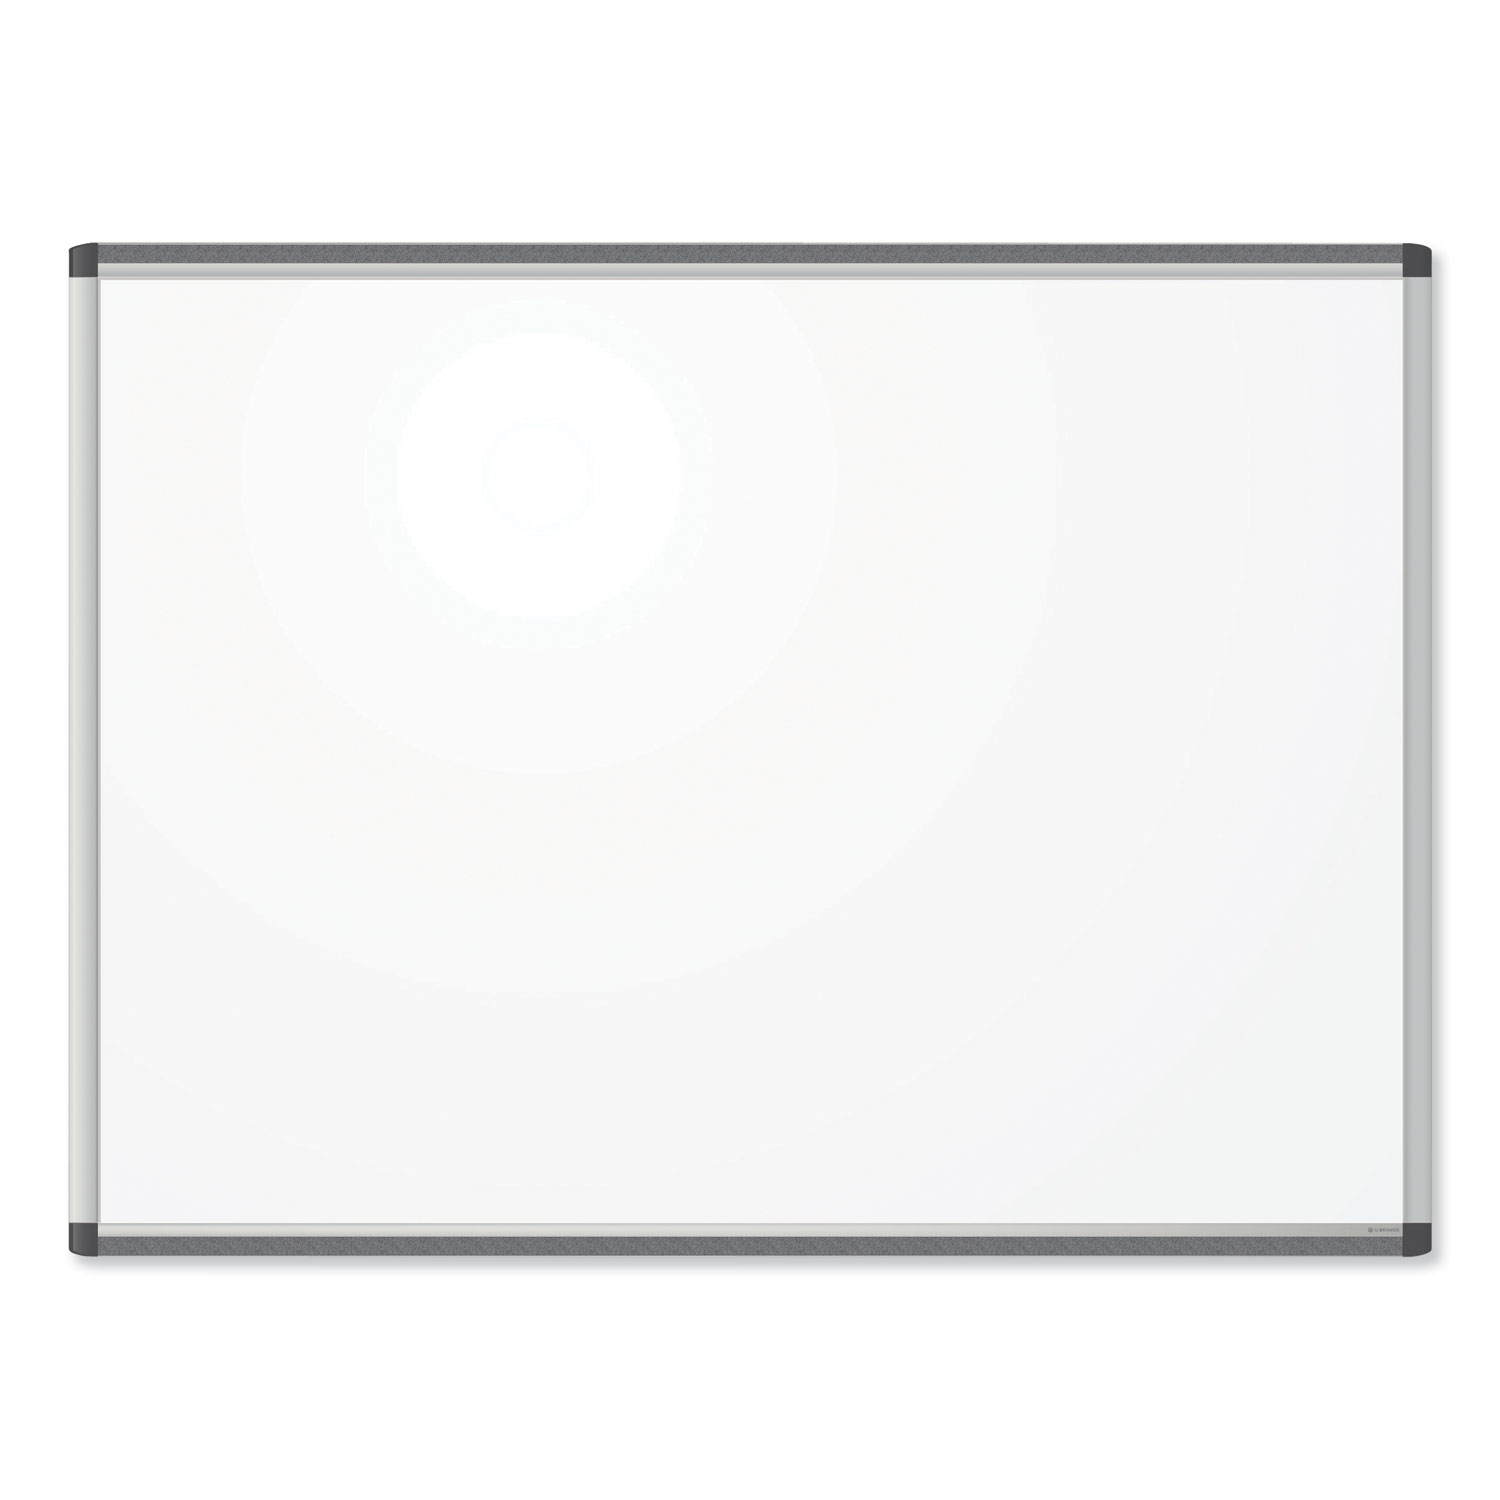  U Brands 2807U00-01 PINIT Magnetic Dry Erase Board, 48 x 36, White (UBR2807U0001) 